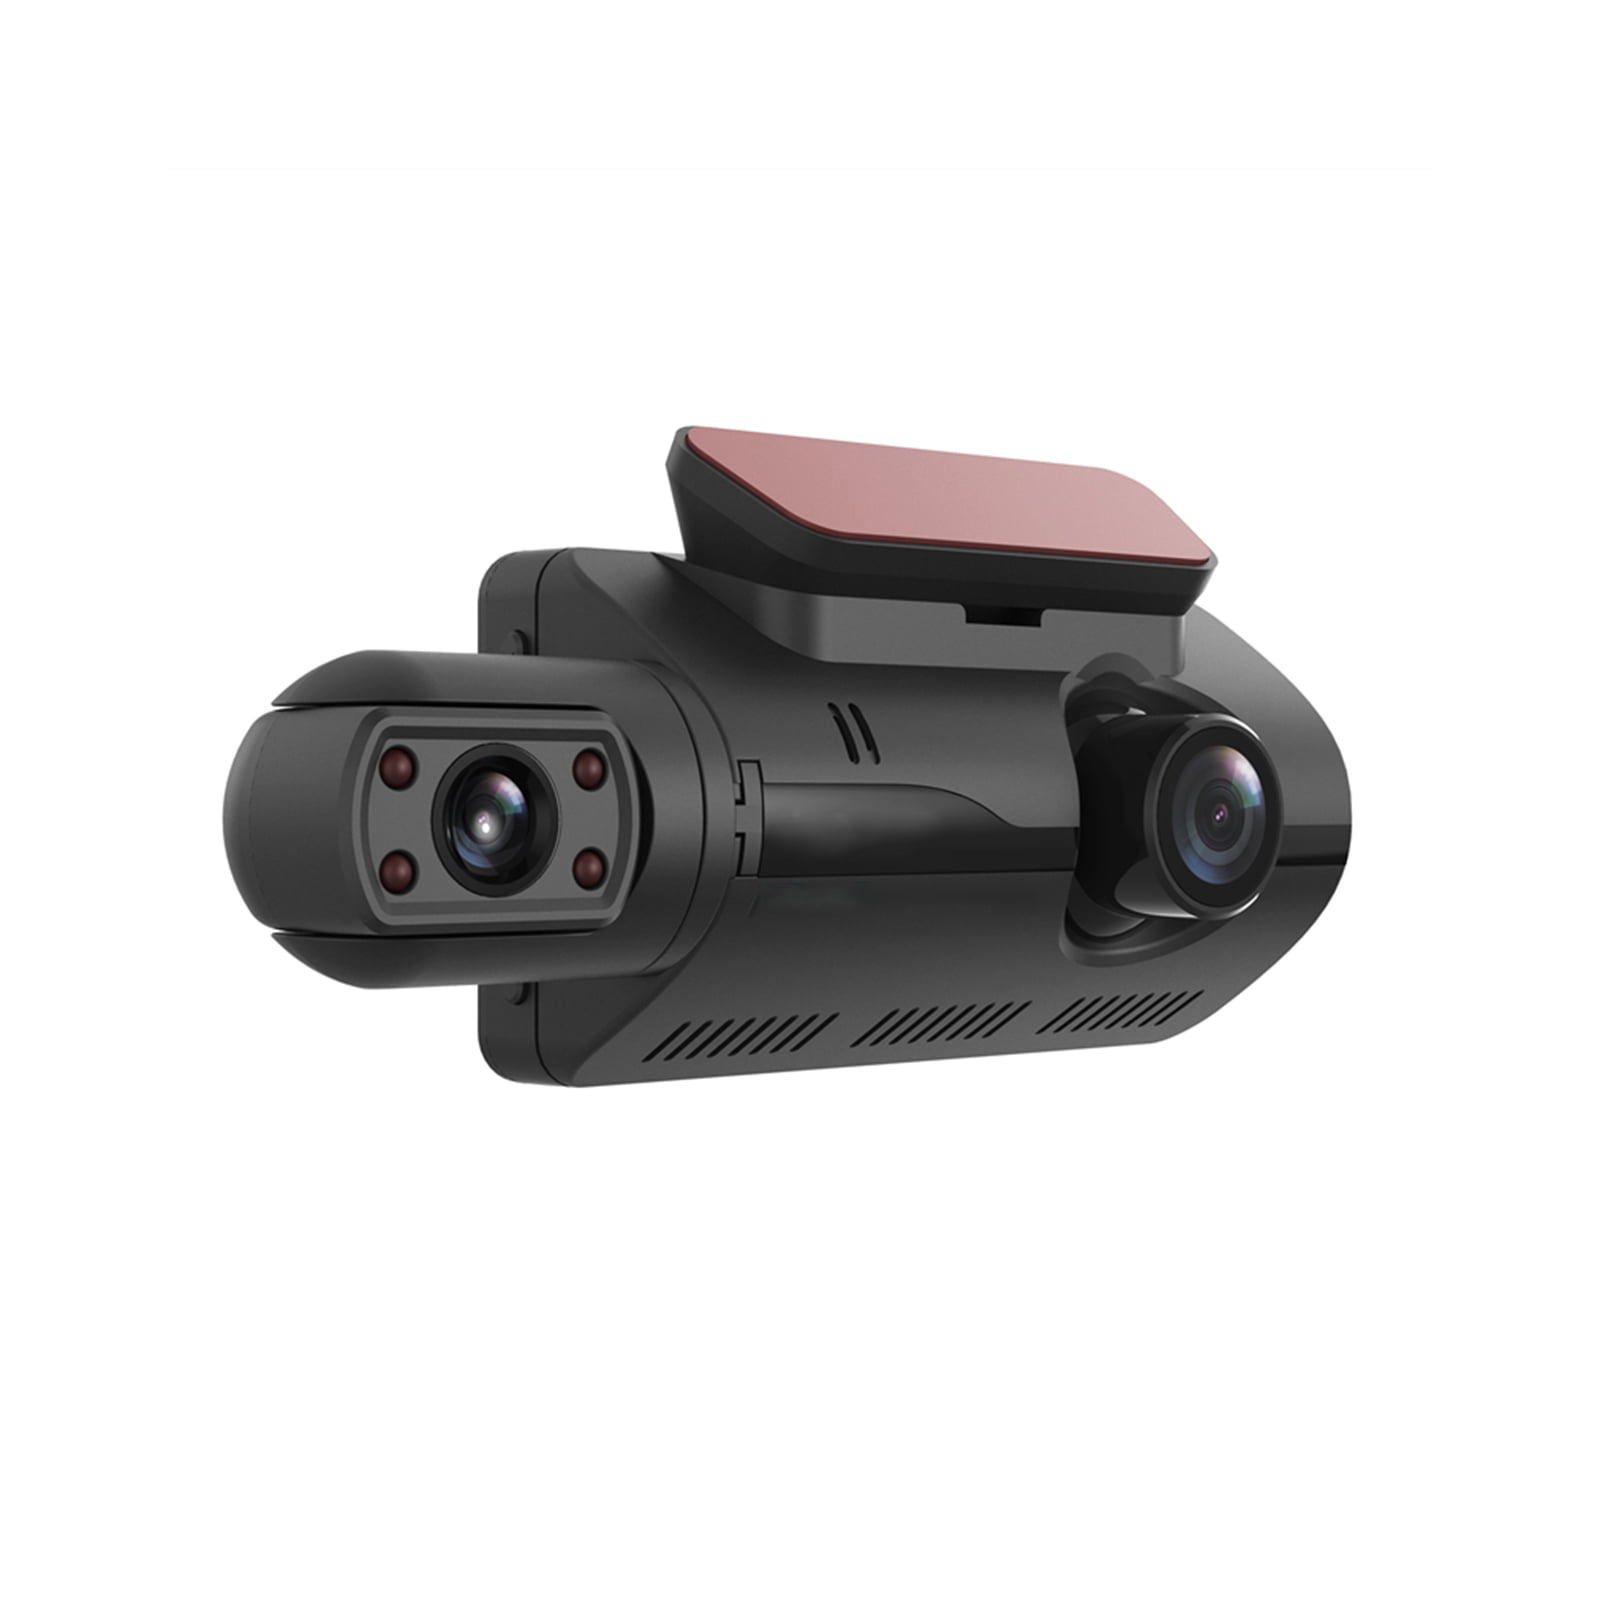 Hd video camera dashcam hd color embarquee automatic car lorry 1080p 